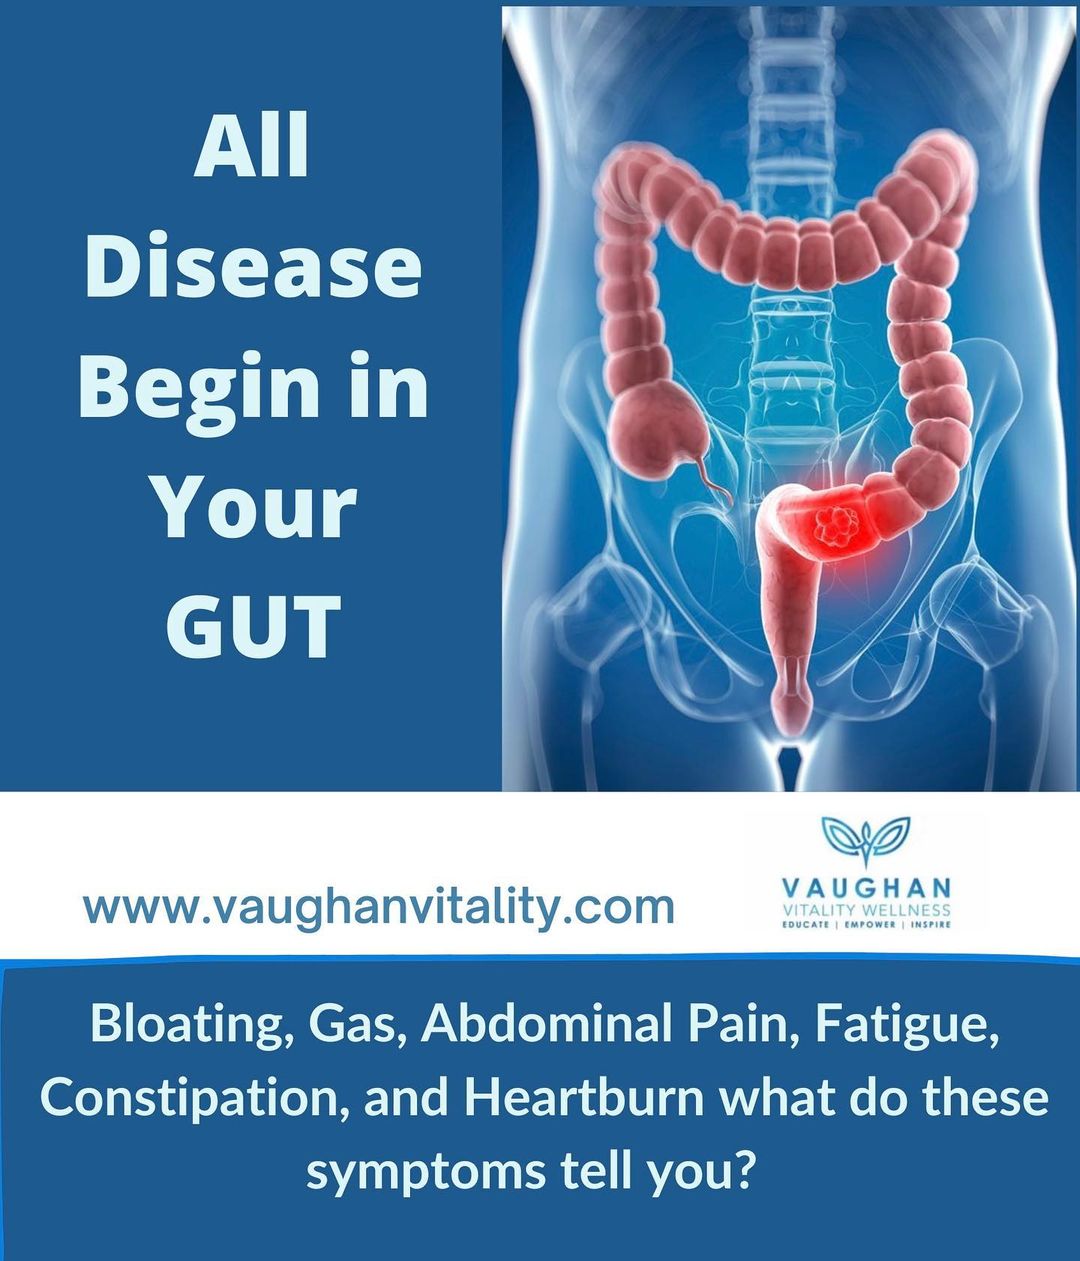 All Disease begins in your gut